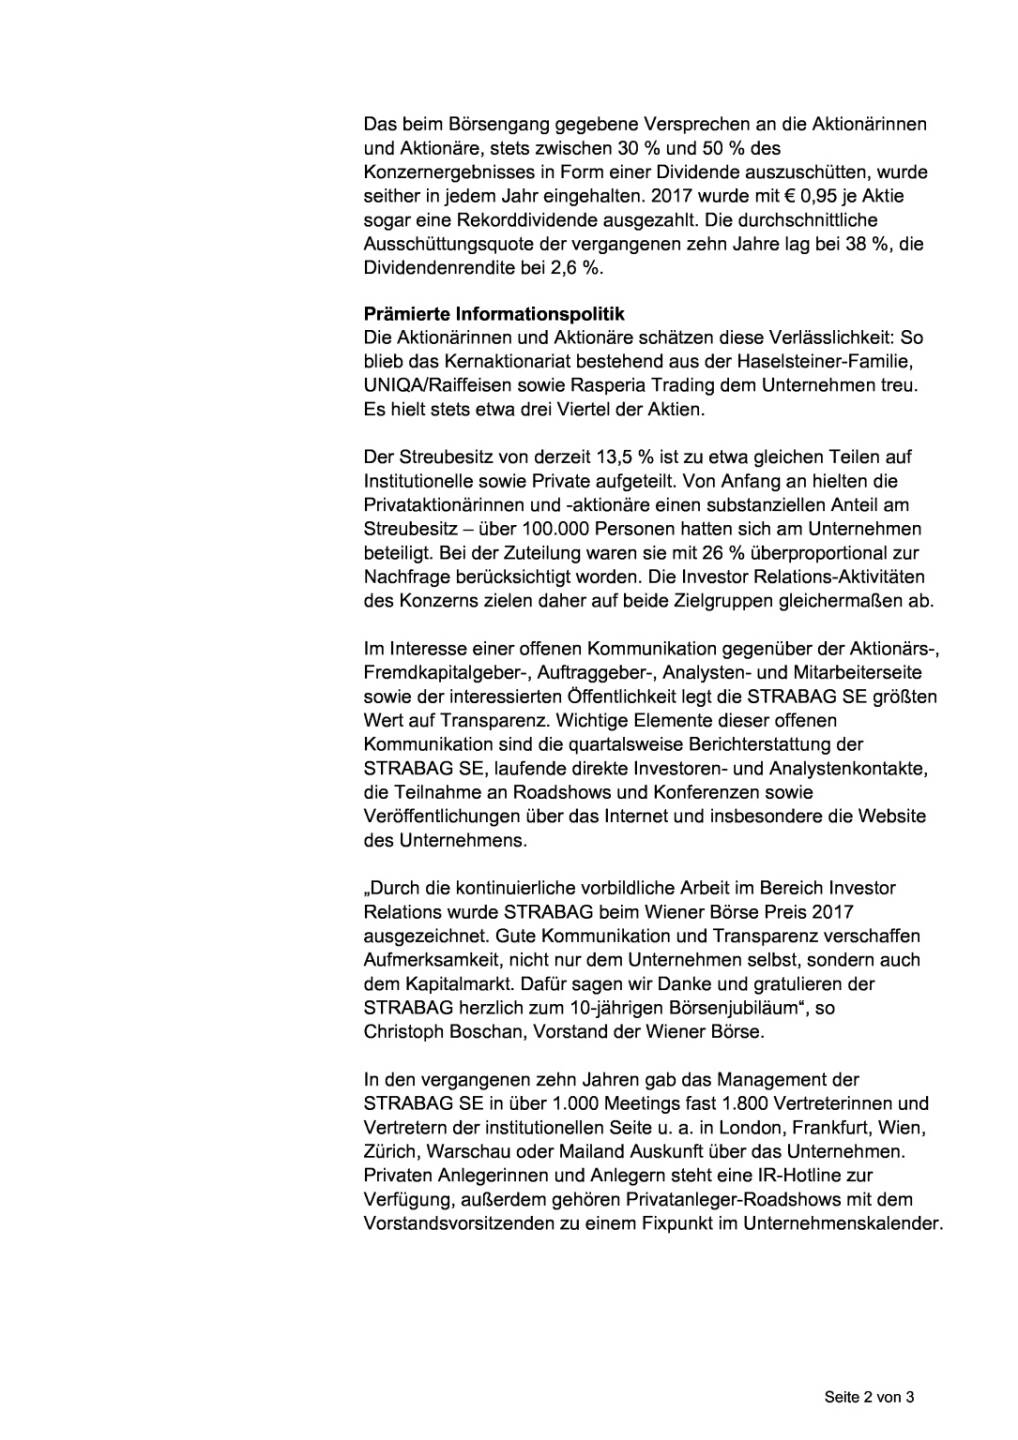 Strabag feiert 10-jähriges Börsejubiläum, Seite 2/3, komplettes Dokument unter http://boerse-social.com/static/uploads/file_2365_strabag_feiert_10-jahriges_borsejubilaum.pdf